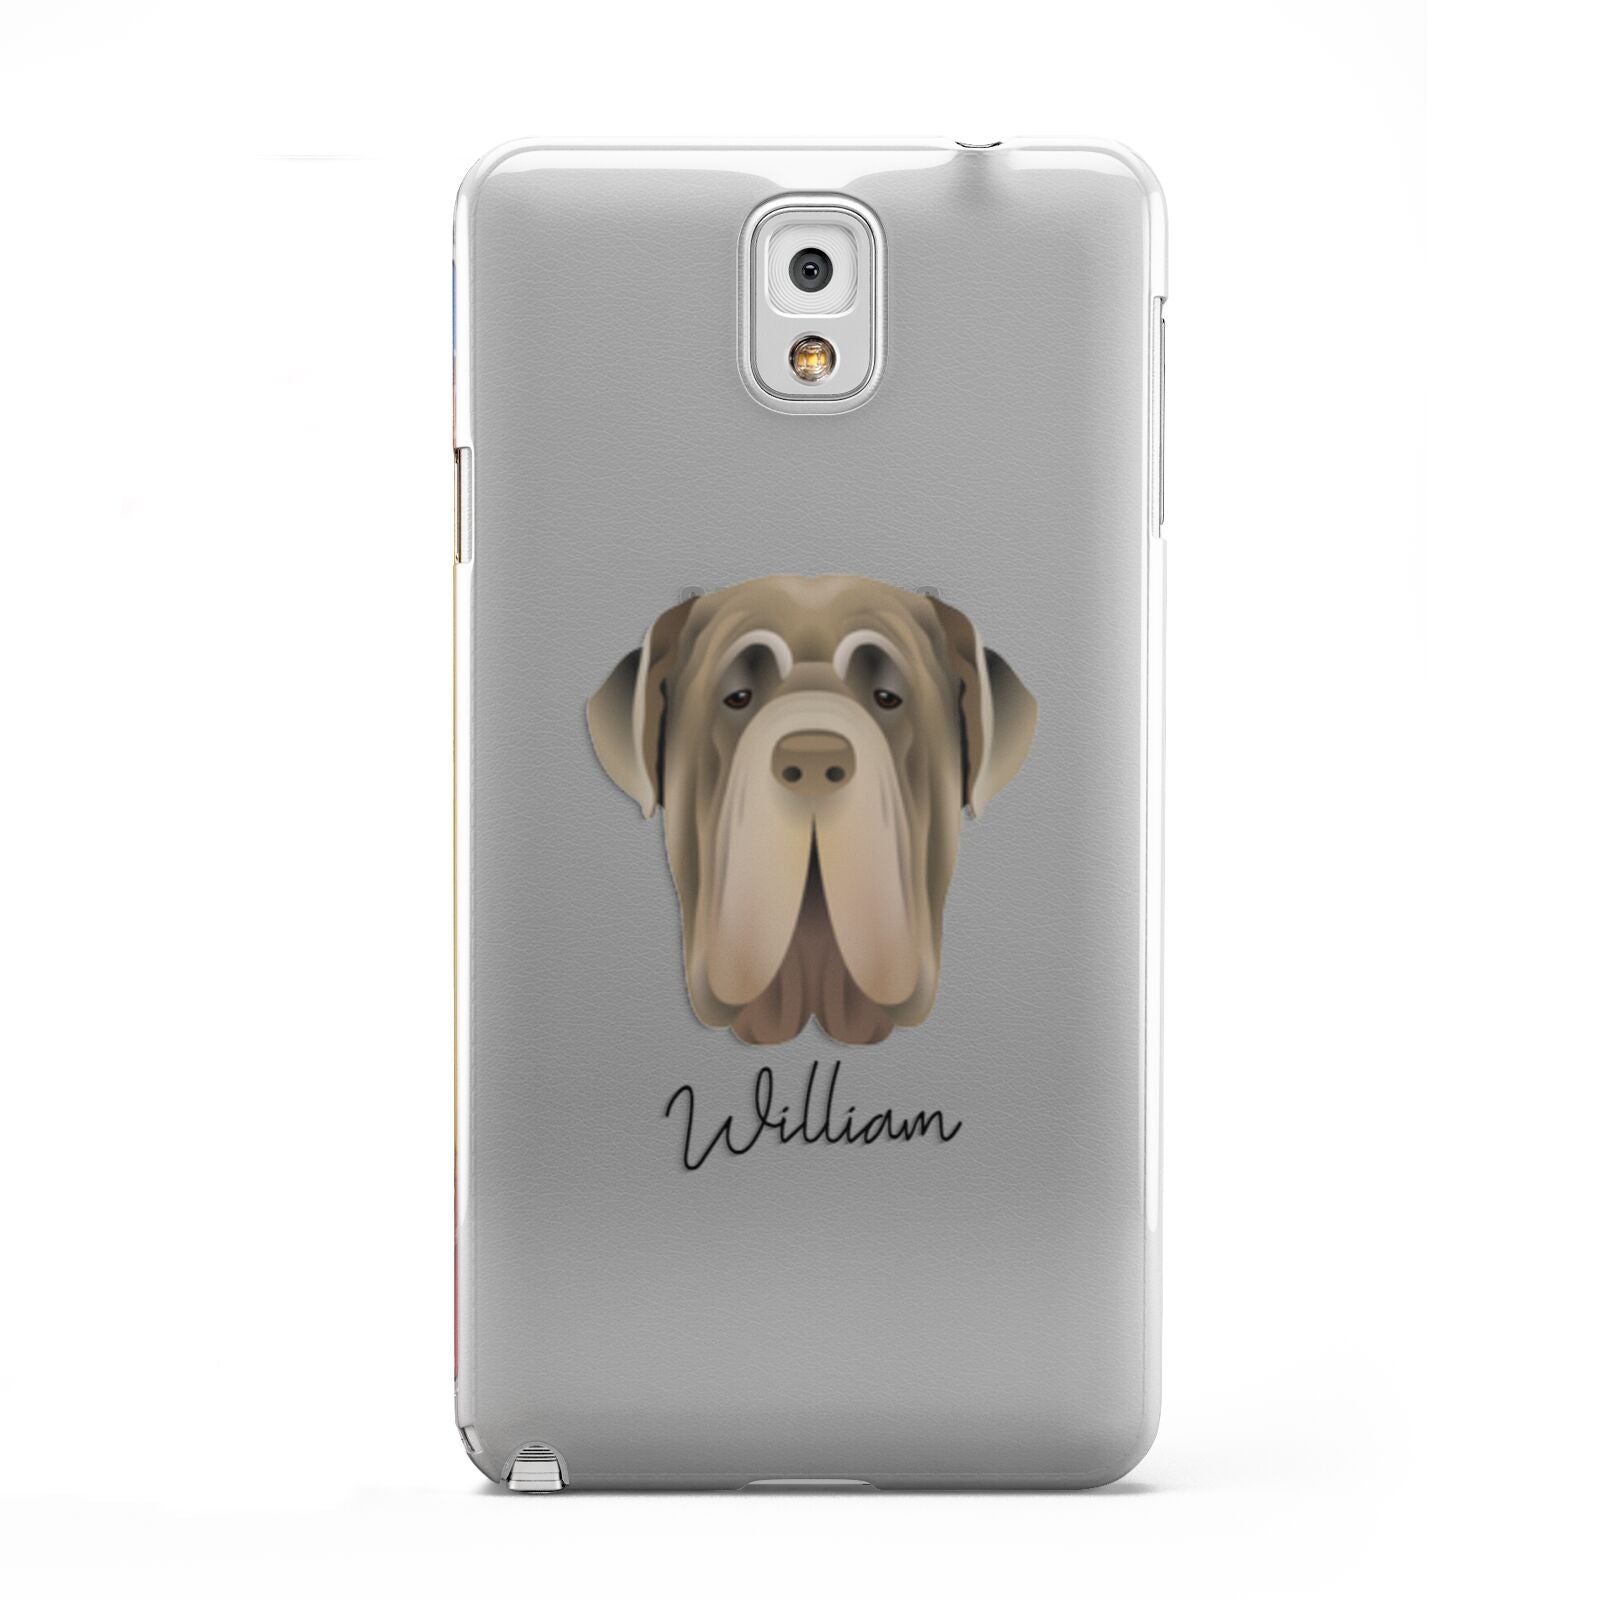 Neapolitan Mastiff Personalised Samsung Galaxy Note 3 Case